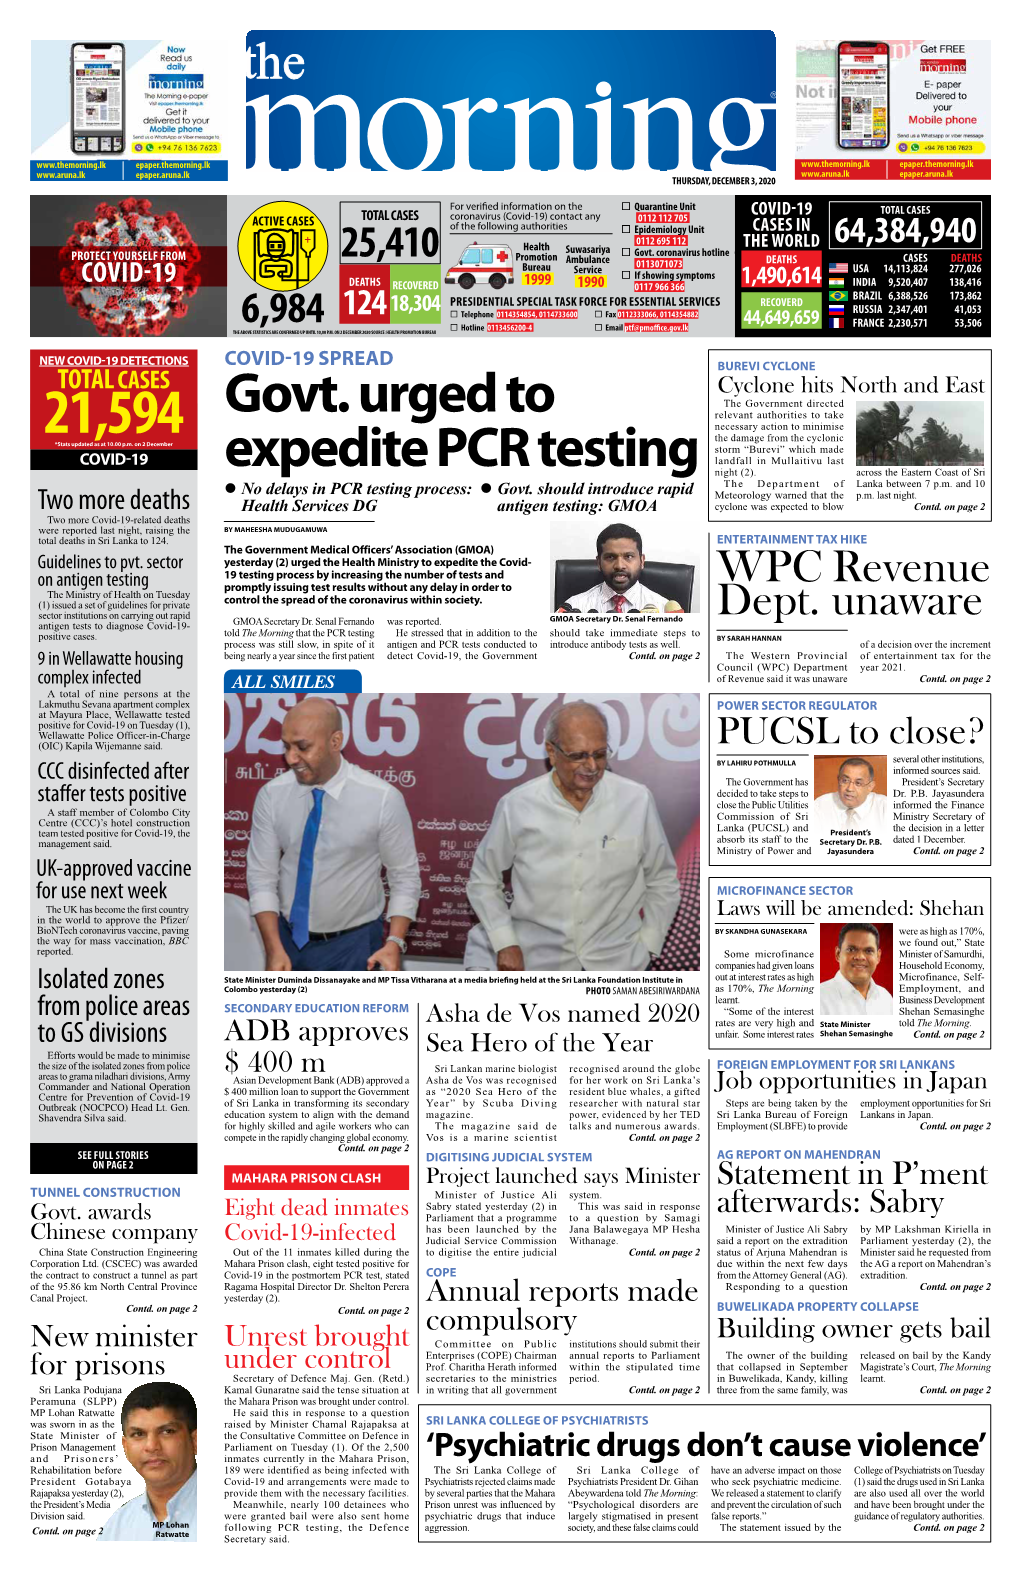 Govt. Urged to Expedite PCR Testing